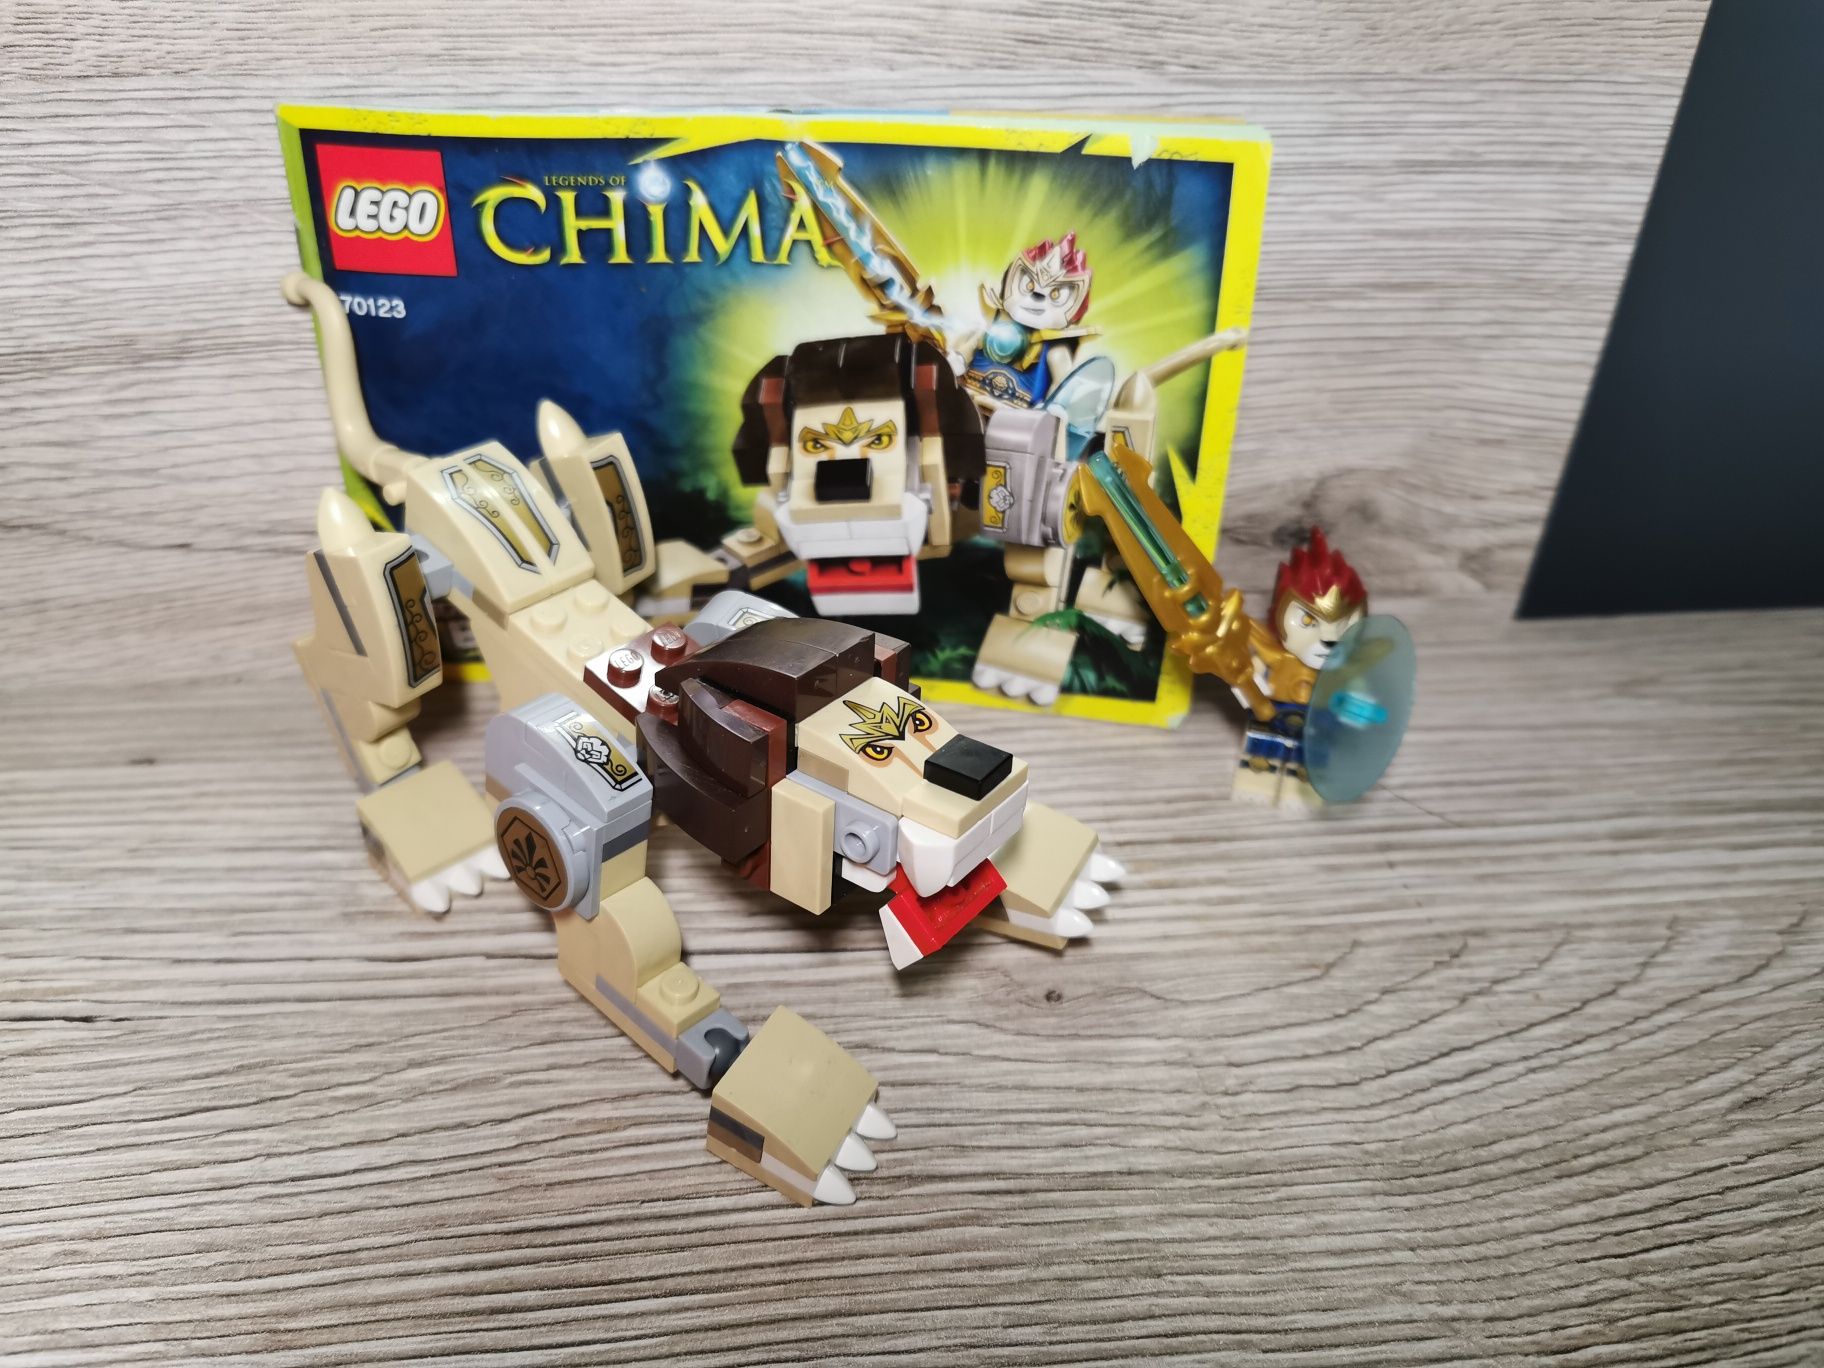 Lego Chima 70123 Lew Legends of Chima kompletny